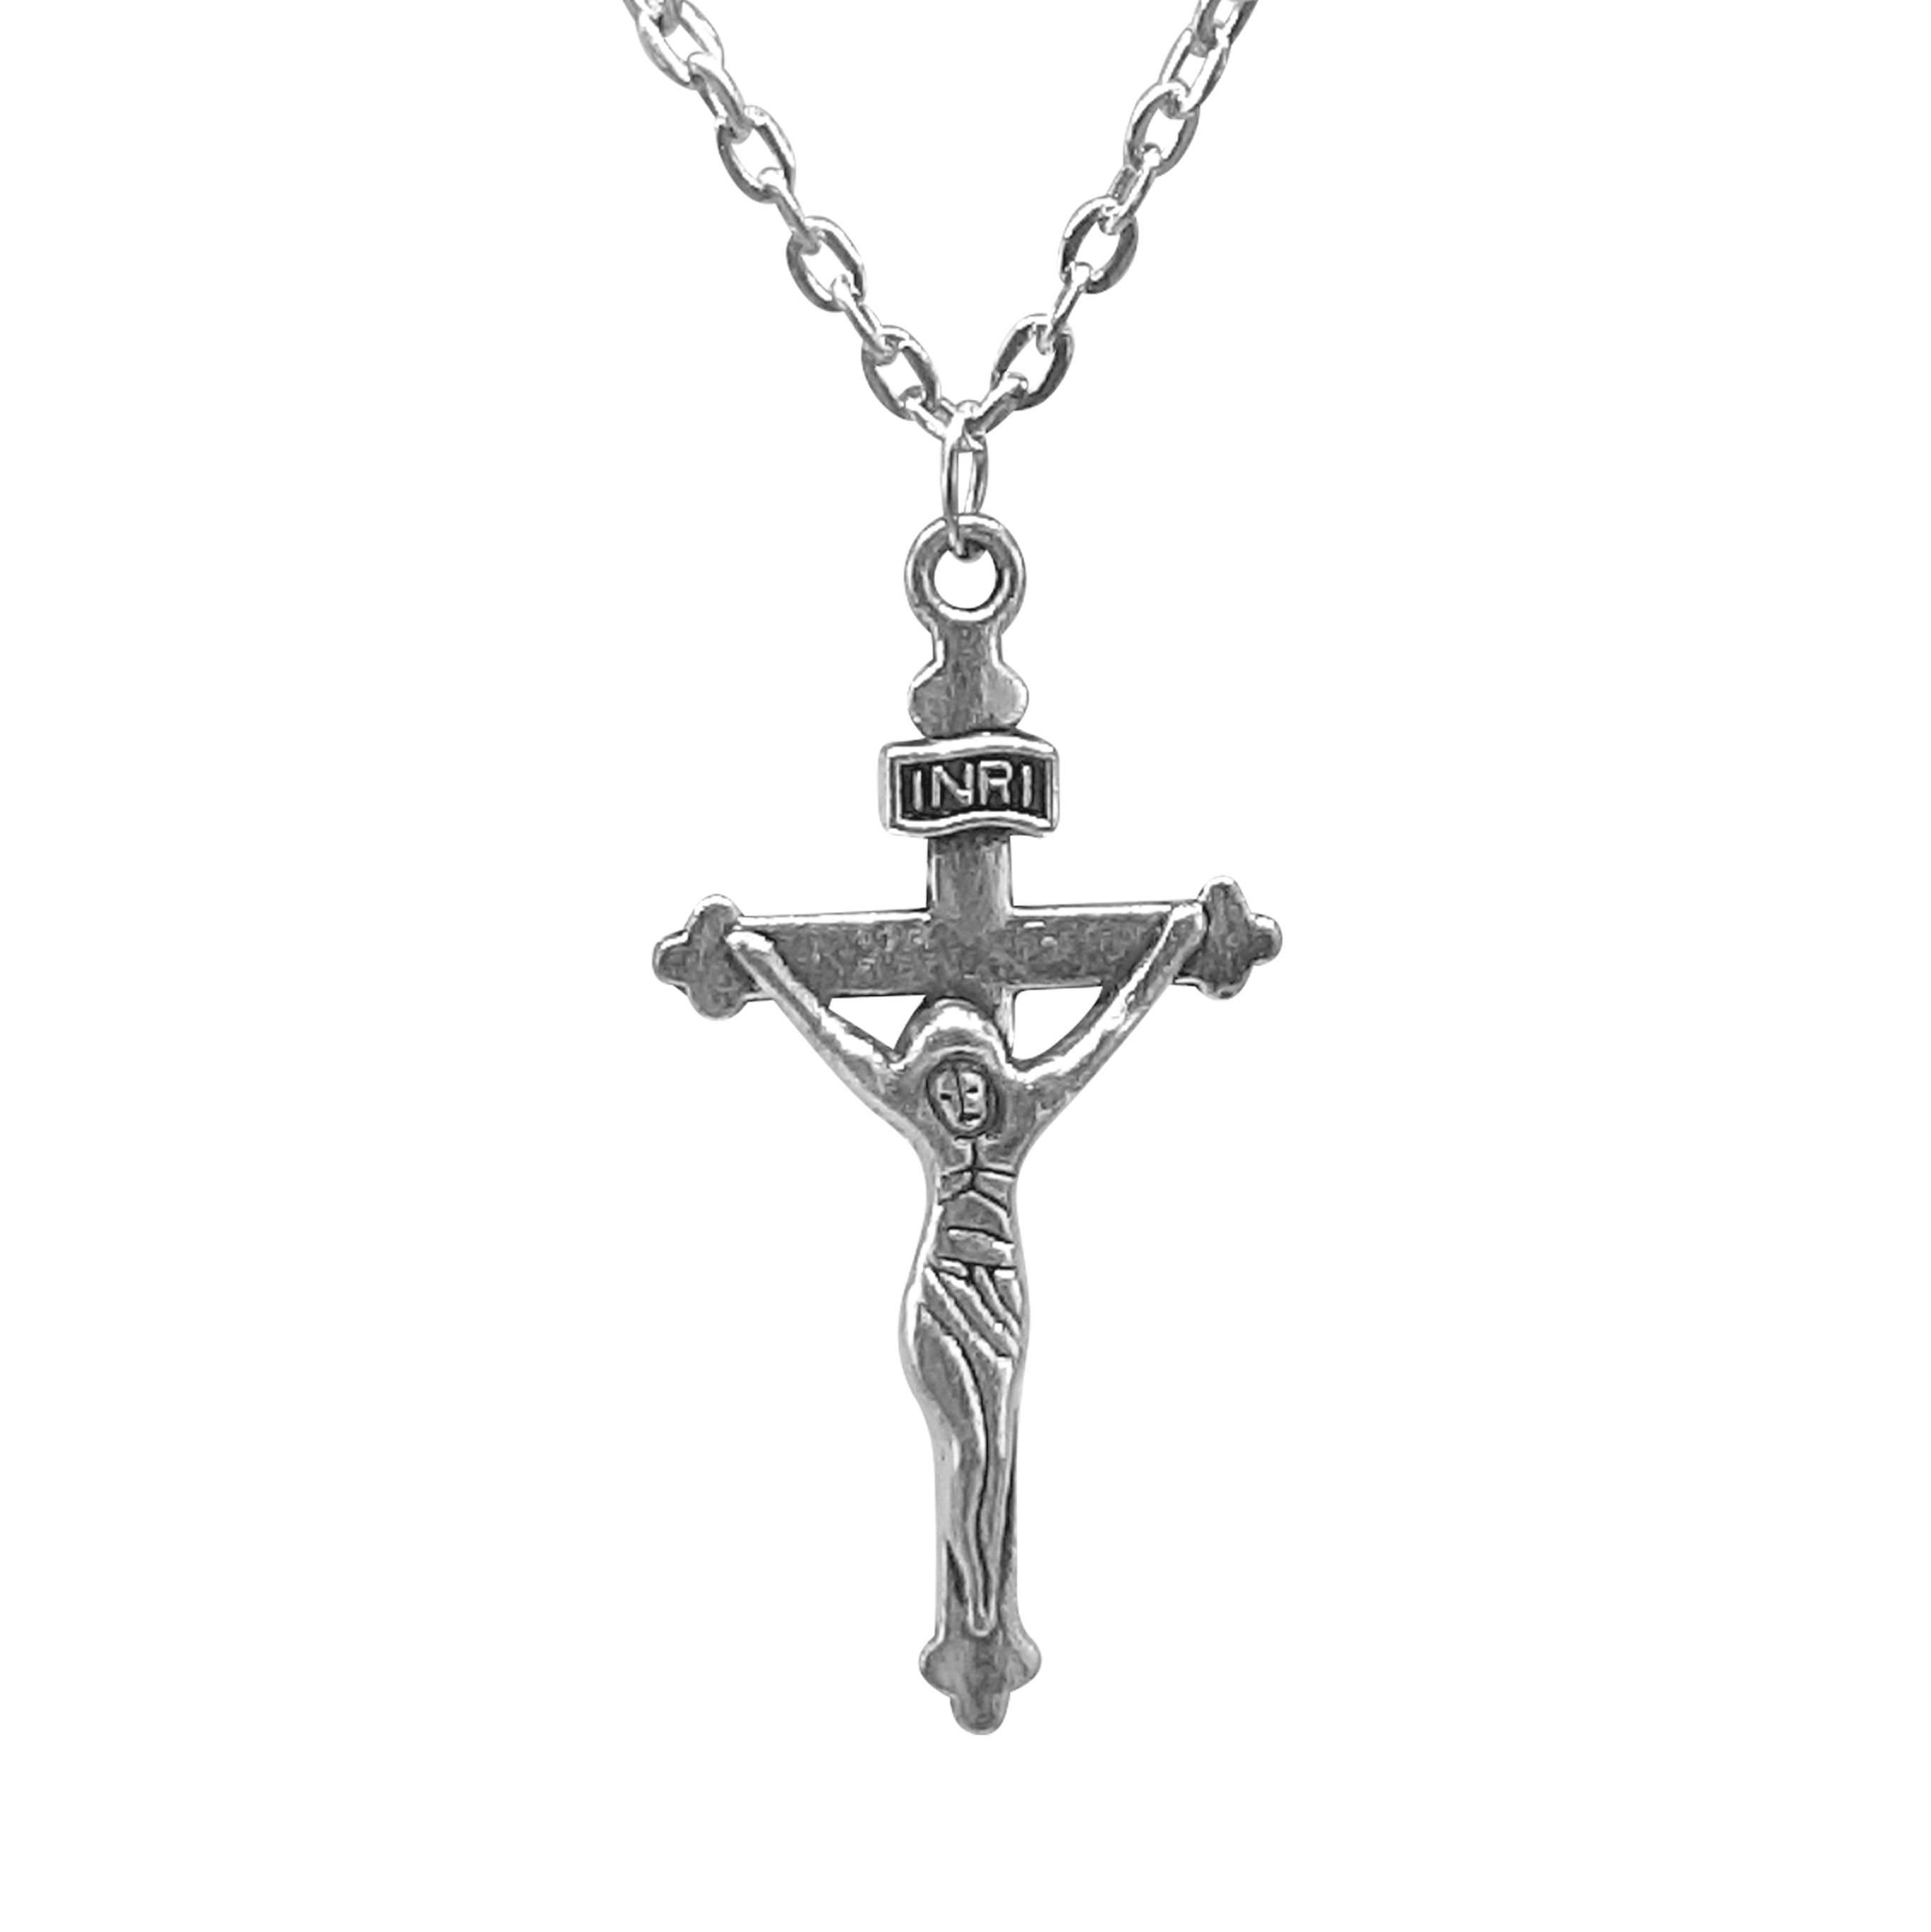 Silver Jesus Christ Crucifix Cross Pendant Necklace Necklaces A Moment Of Now Women’s Boutique Clothing Online Lifestyle Store